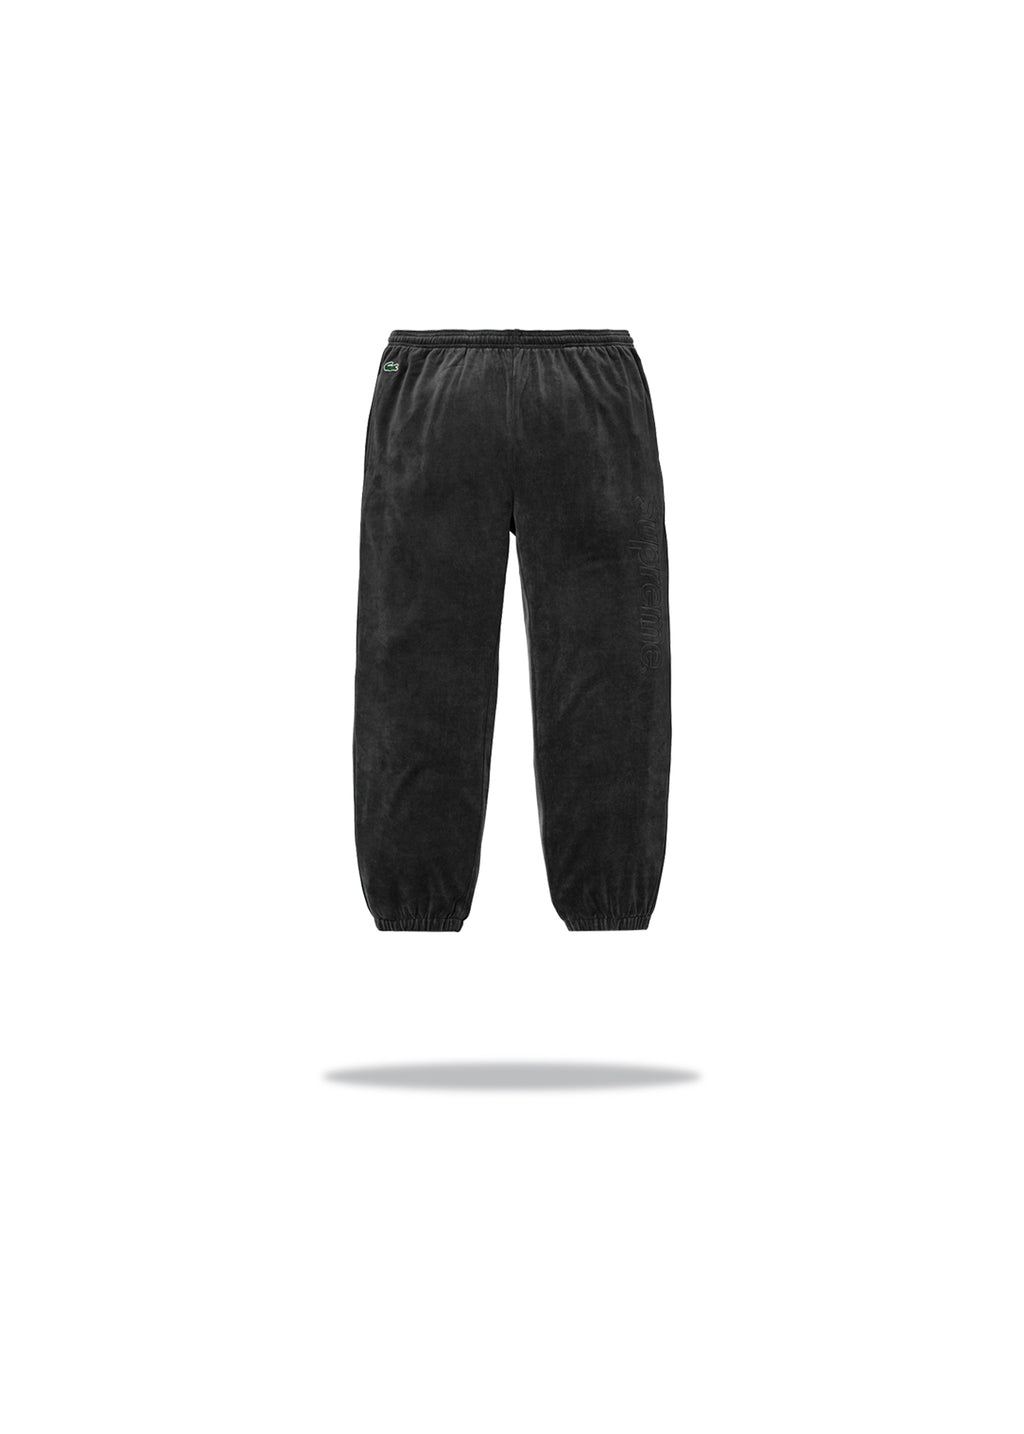 Supreme x Lacoste Velour Pants Black